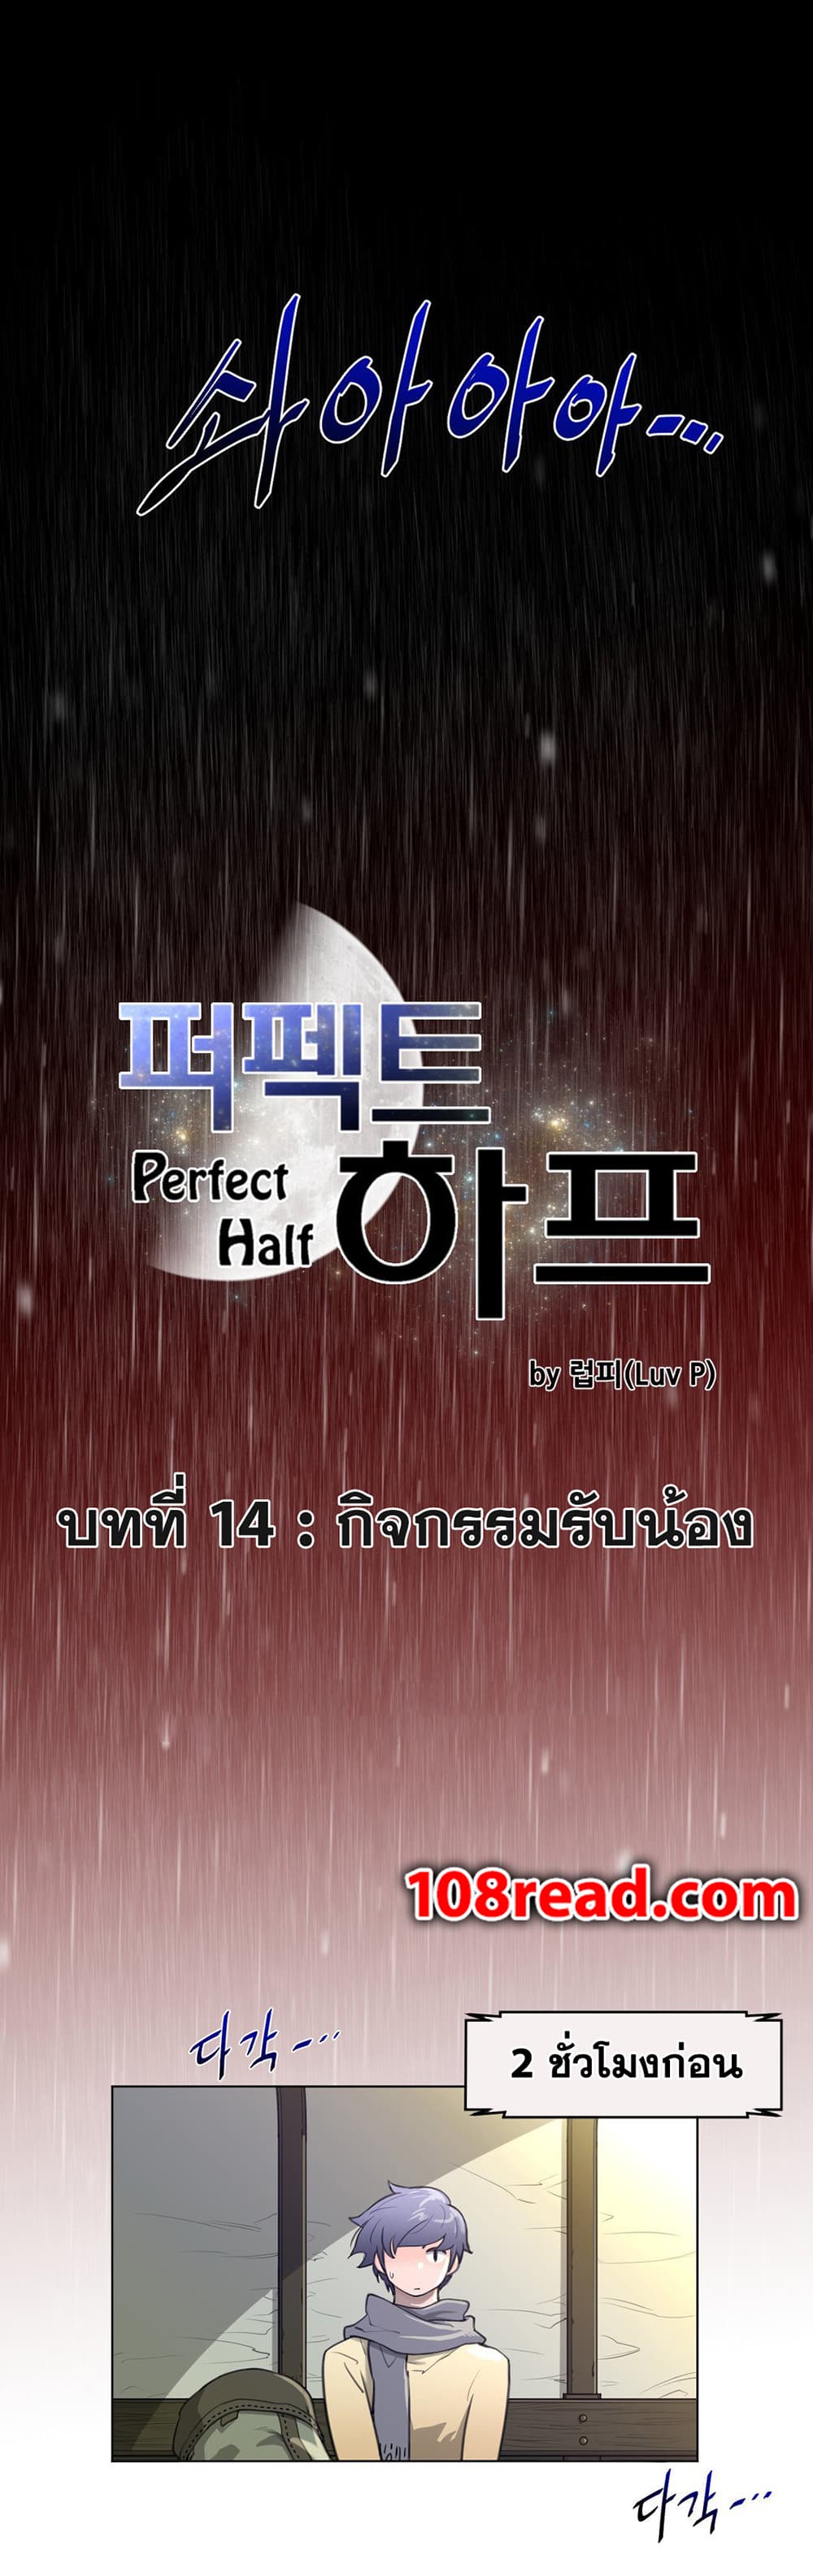 Perfect Half14 (6)